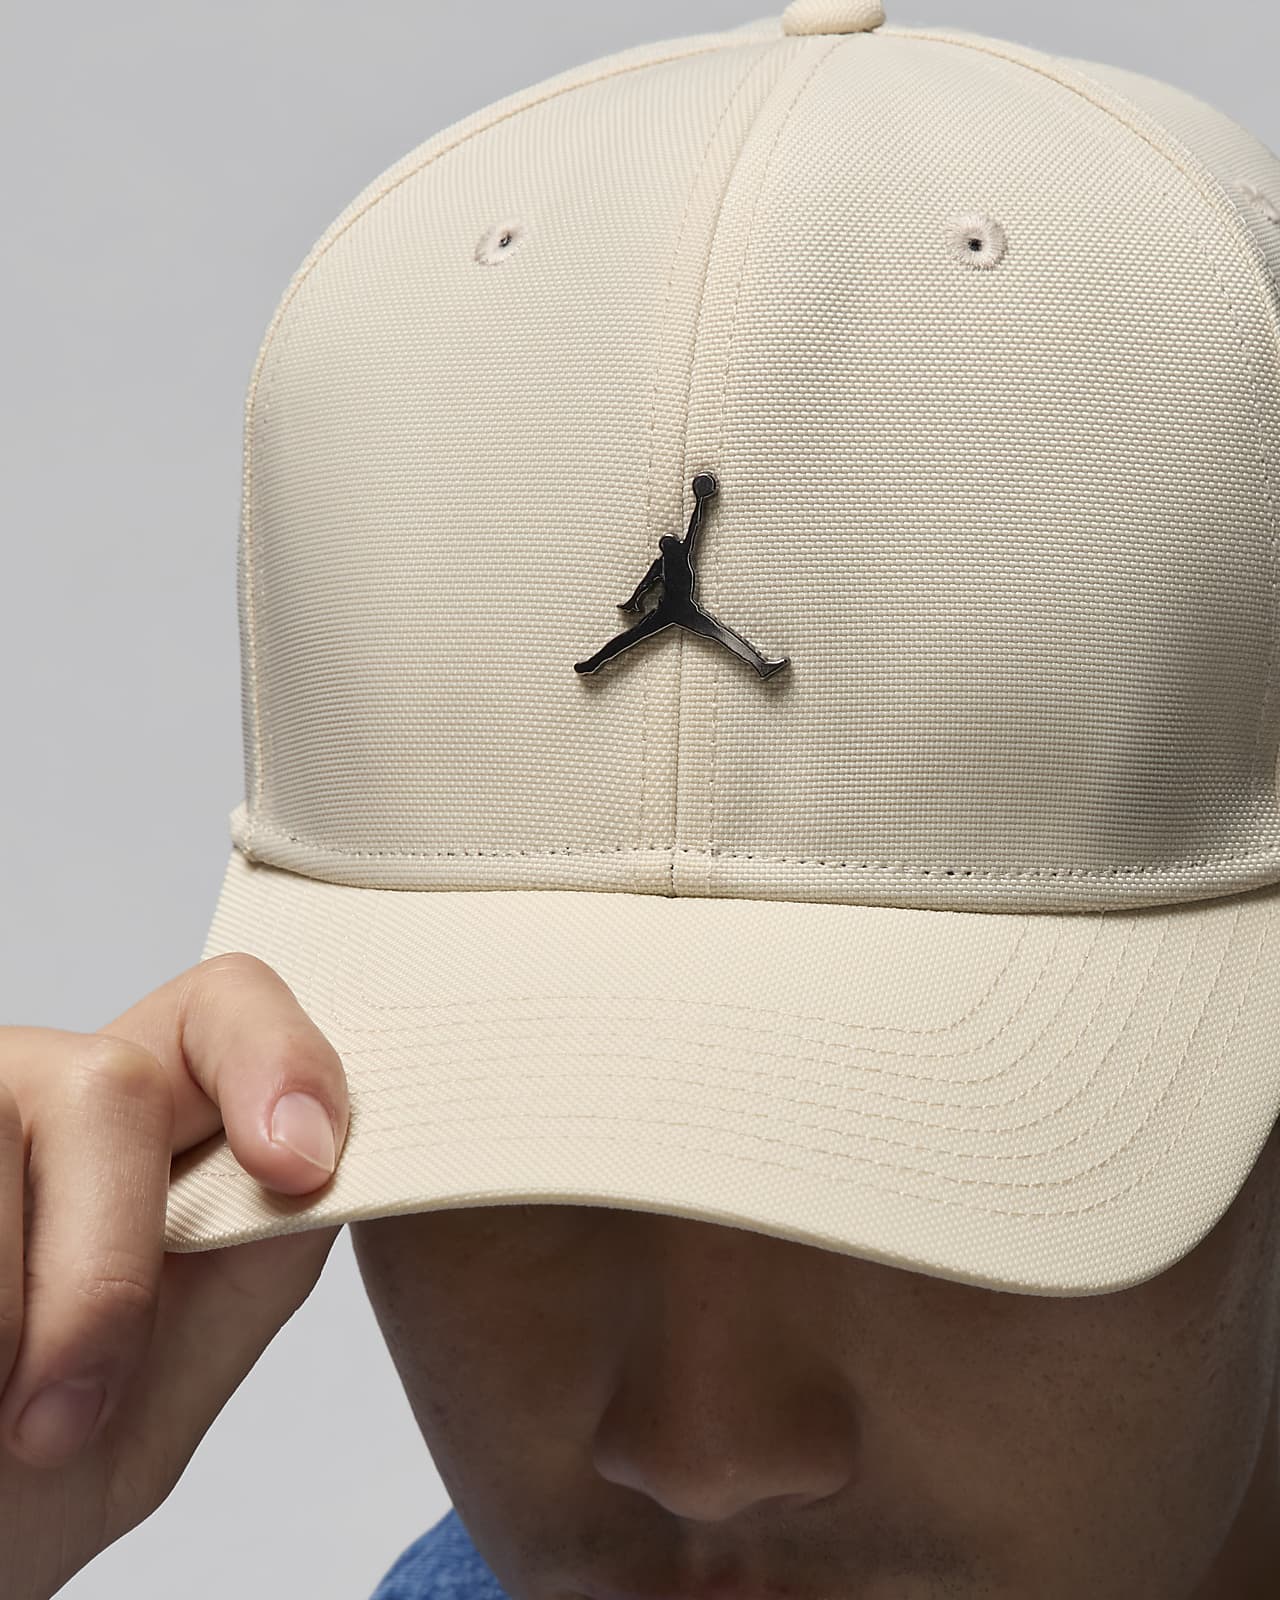 Jordan Rise Cap Adjustable Hat, by Nike Size L/XL (Blue)